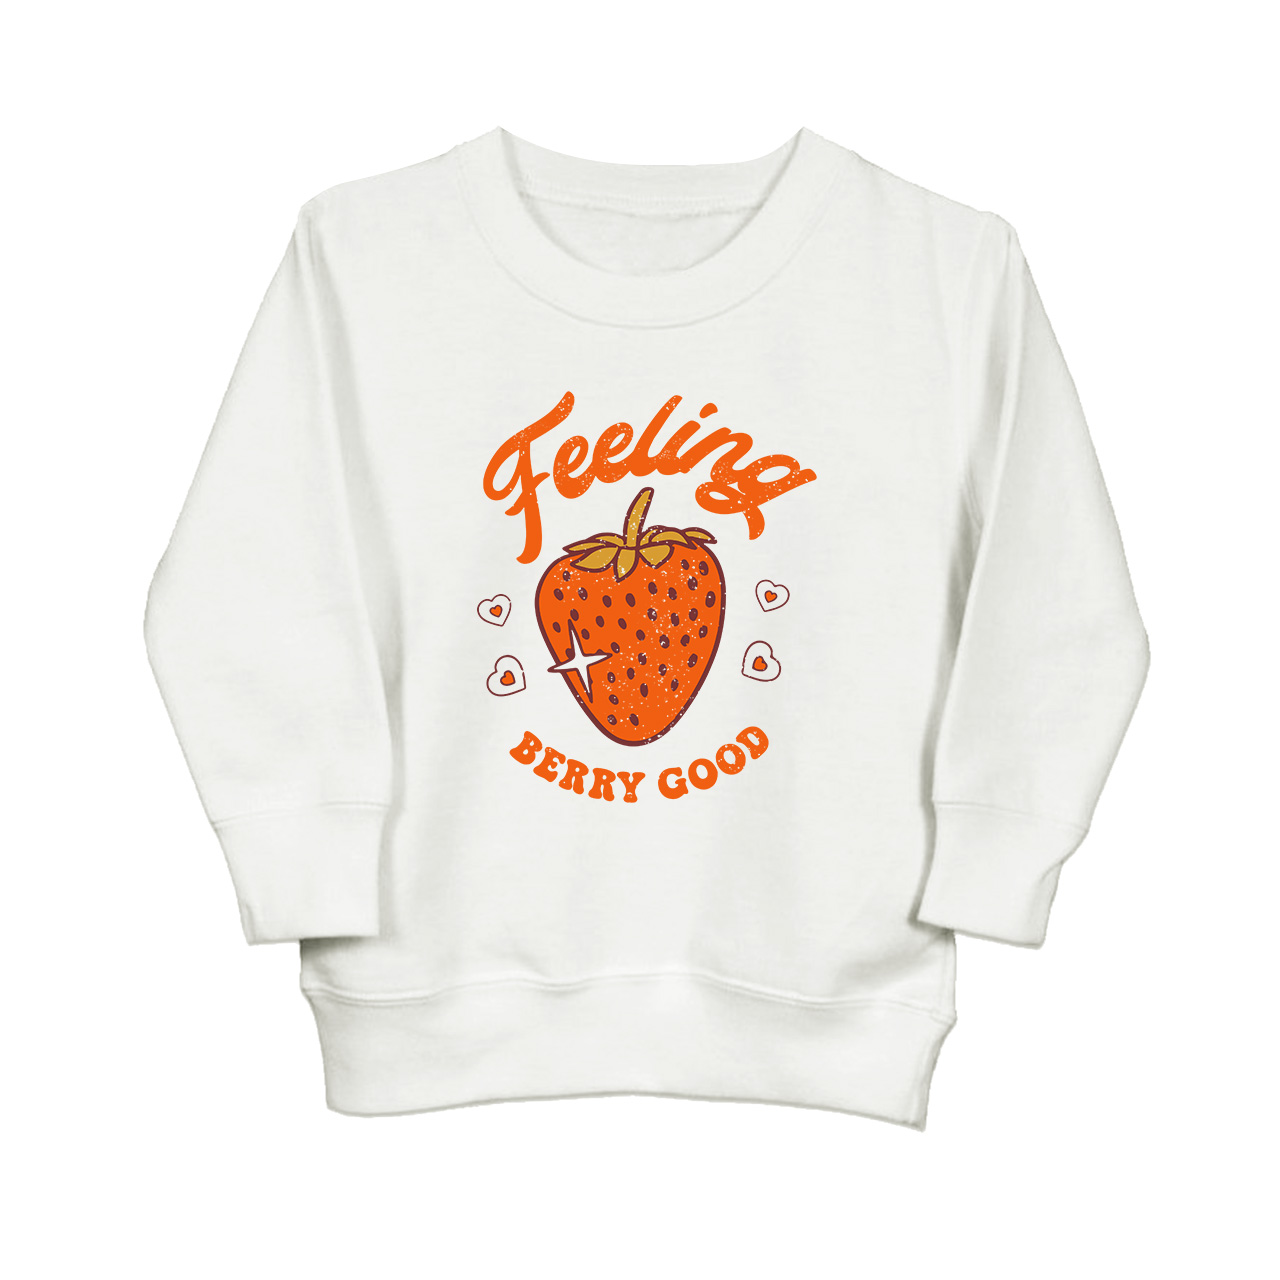 Feeling Berry Good Strawberry Kids Sweatshirt